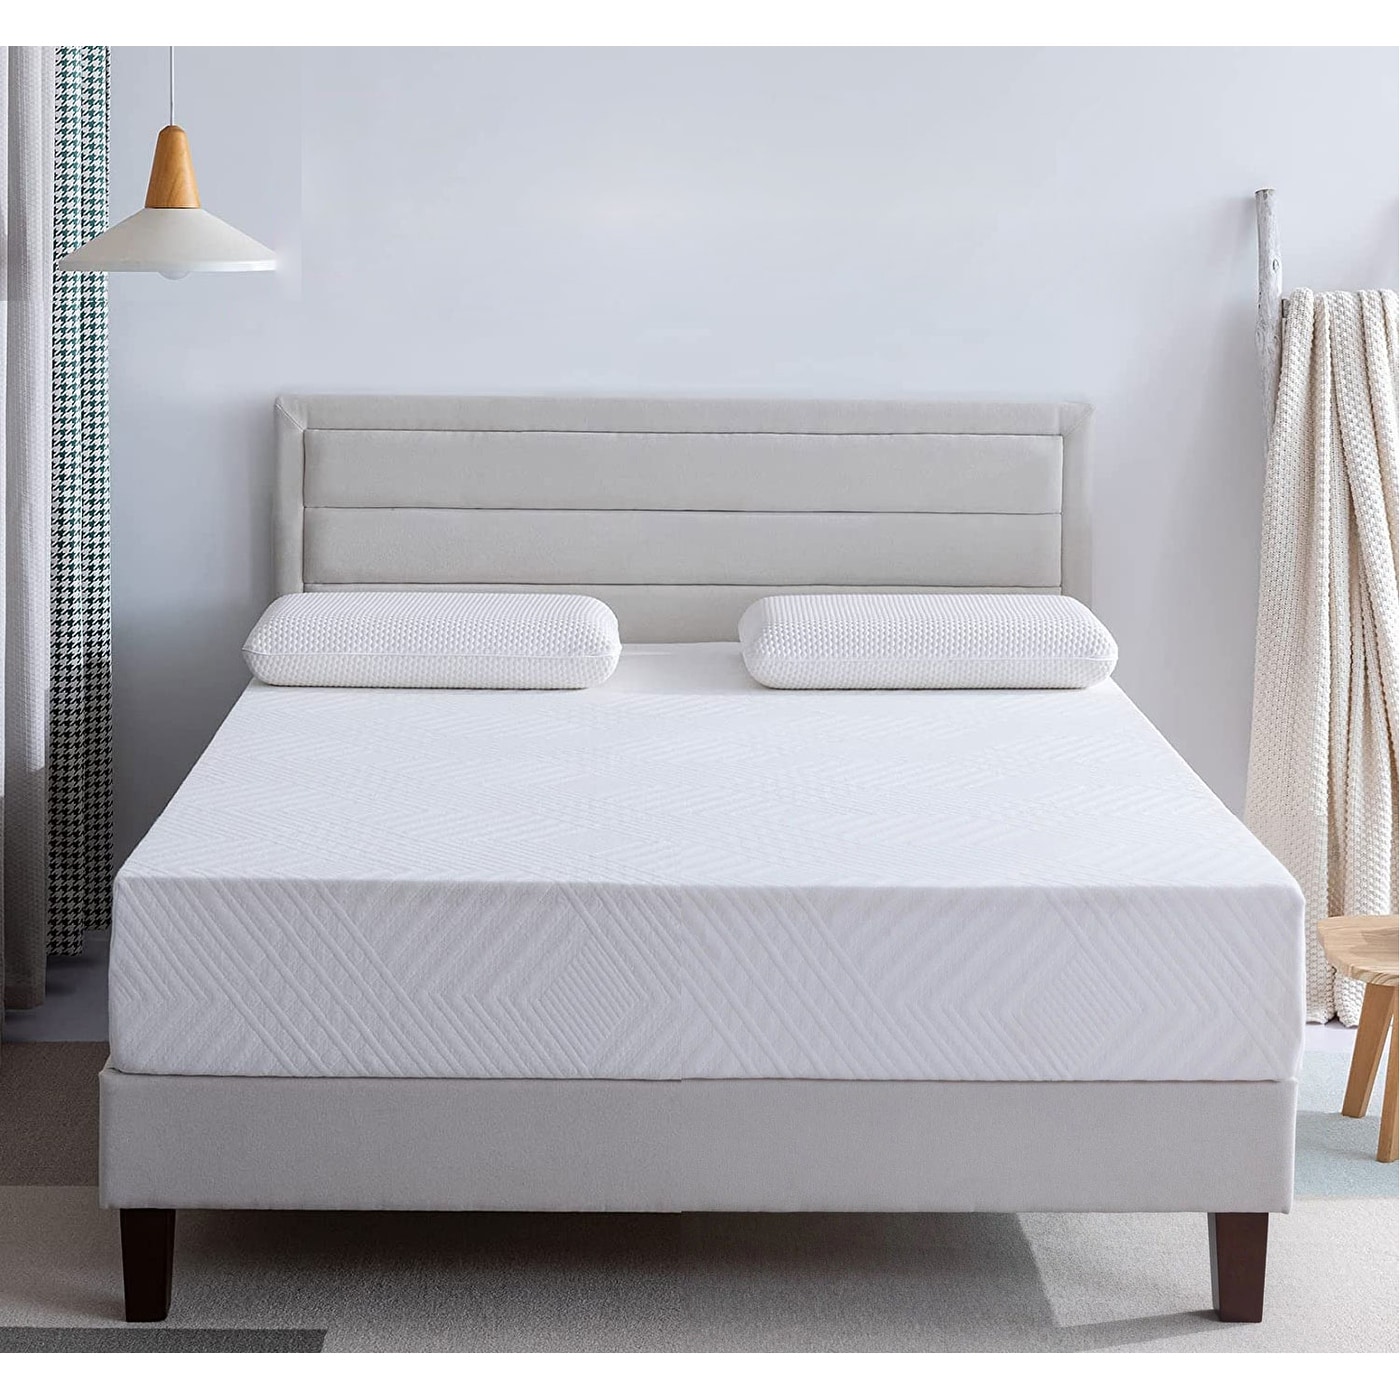 Zinus Memory Foam 5 inch Mattress Narrow Twin / Cot Size / RV Bunk / Guest Bed